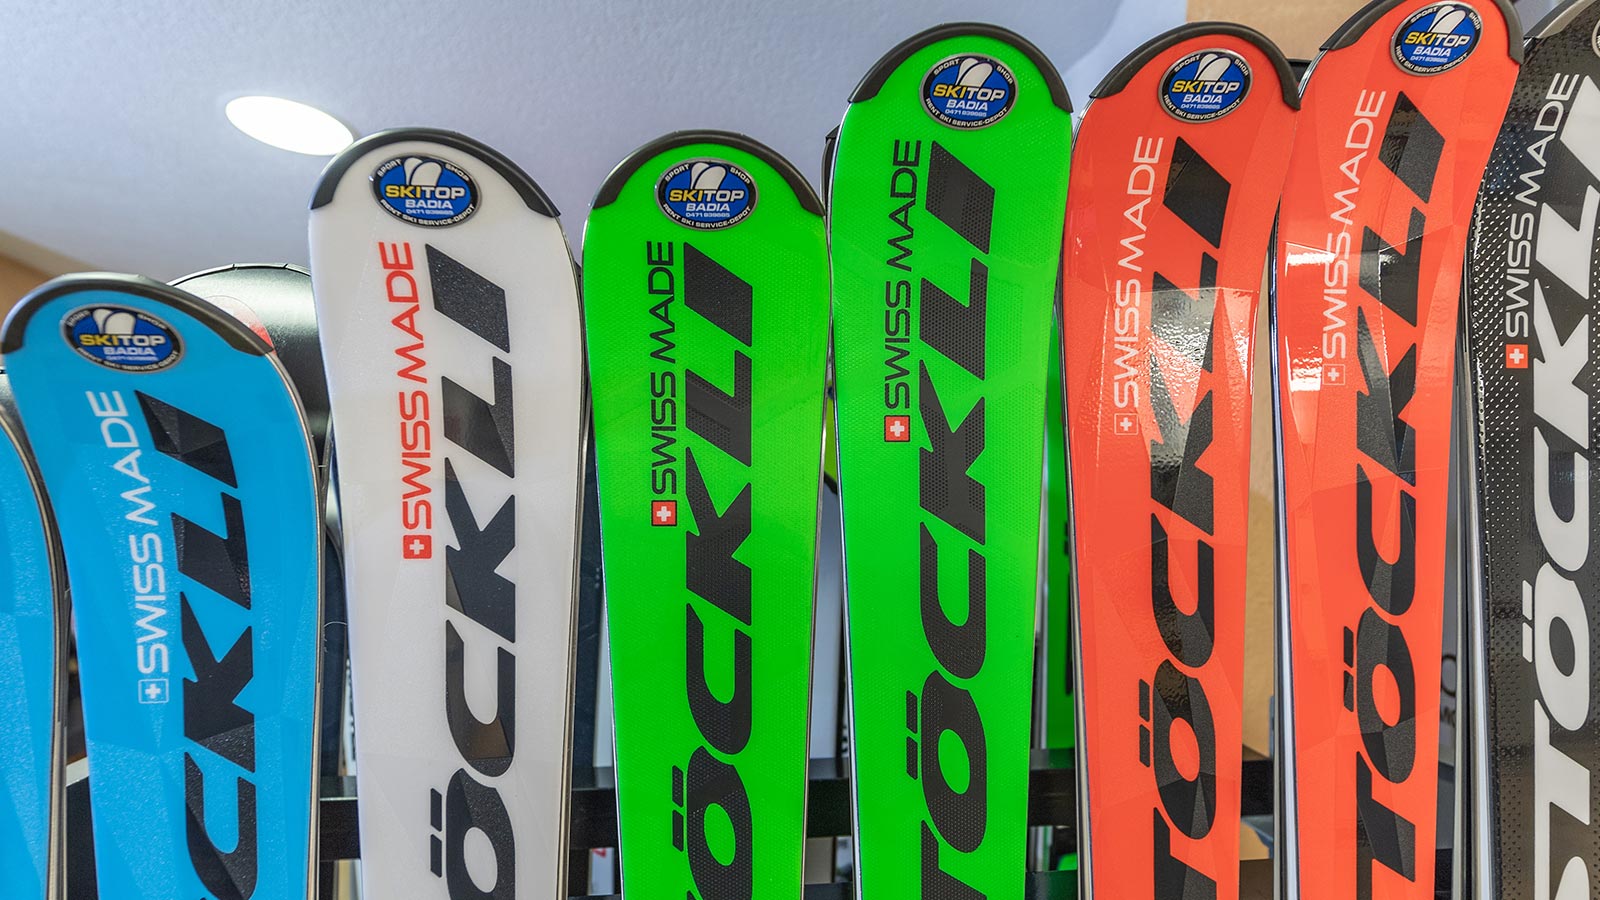 Detail of the Ski Top Badia logo on rental ski equipment